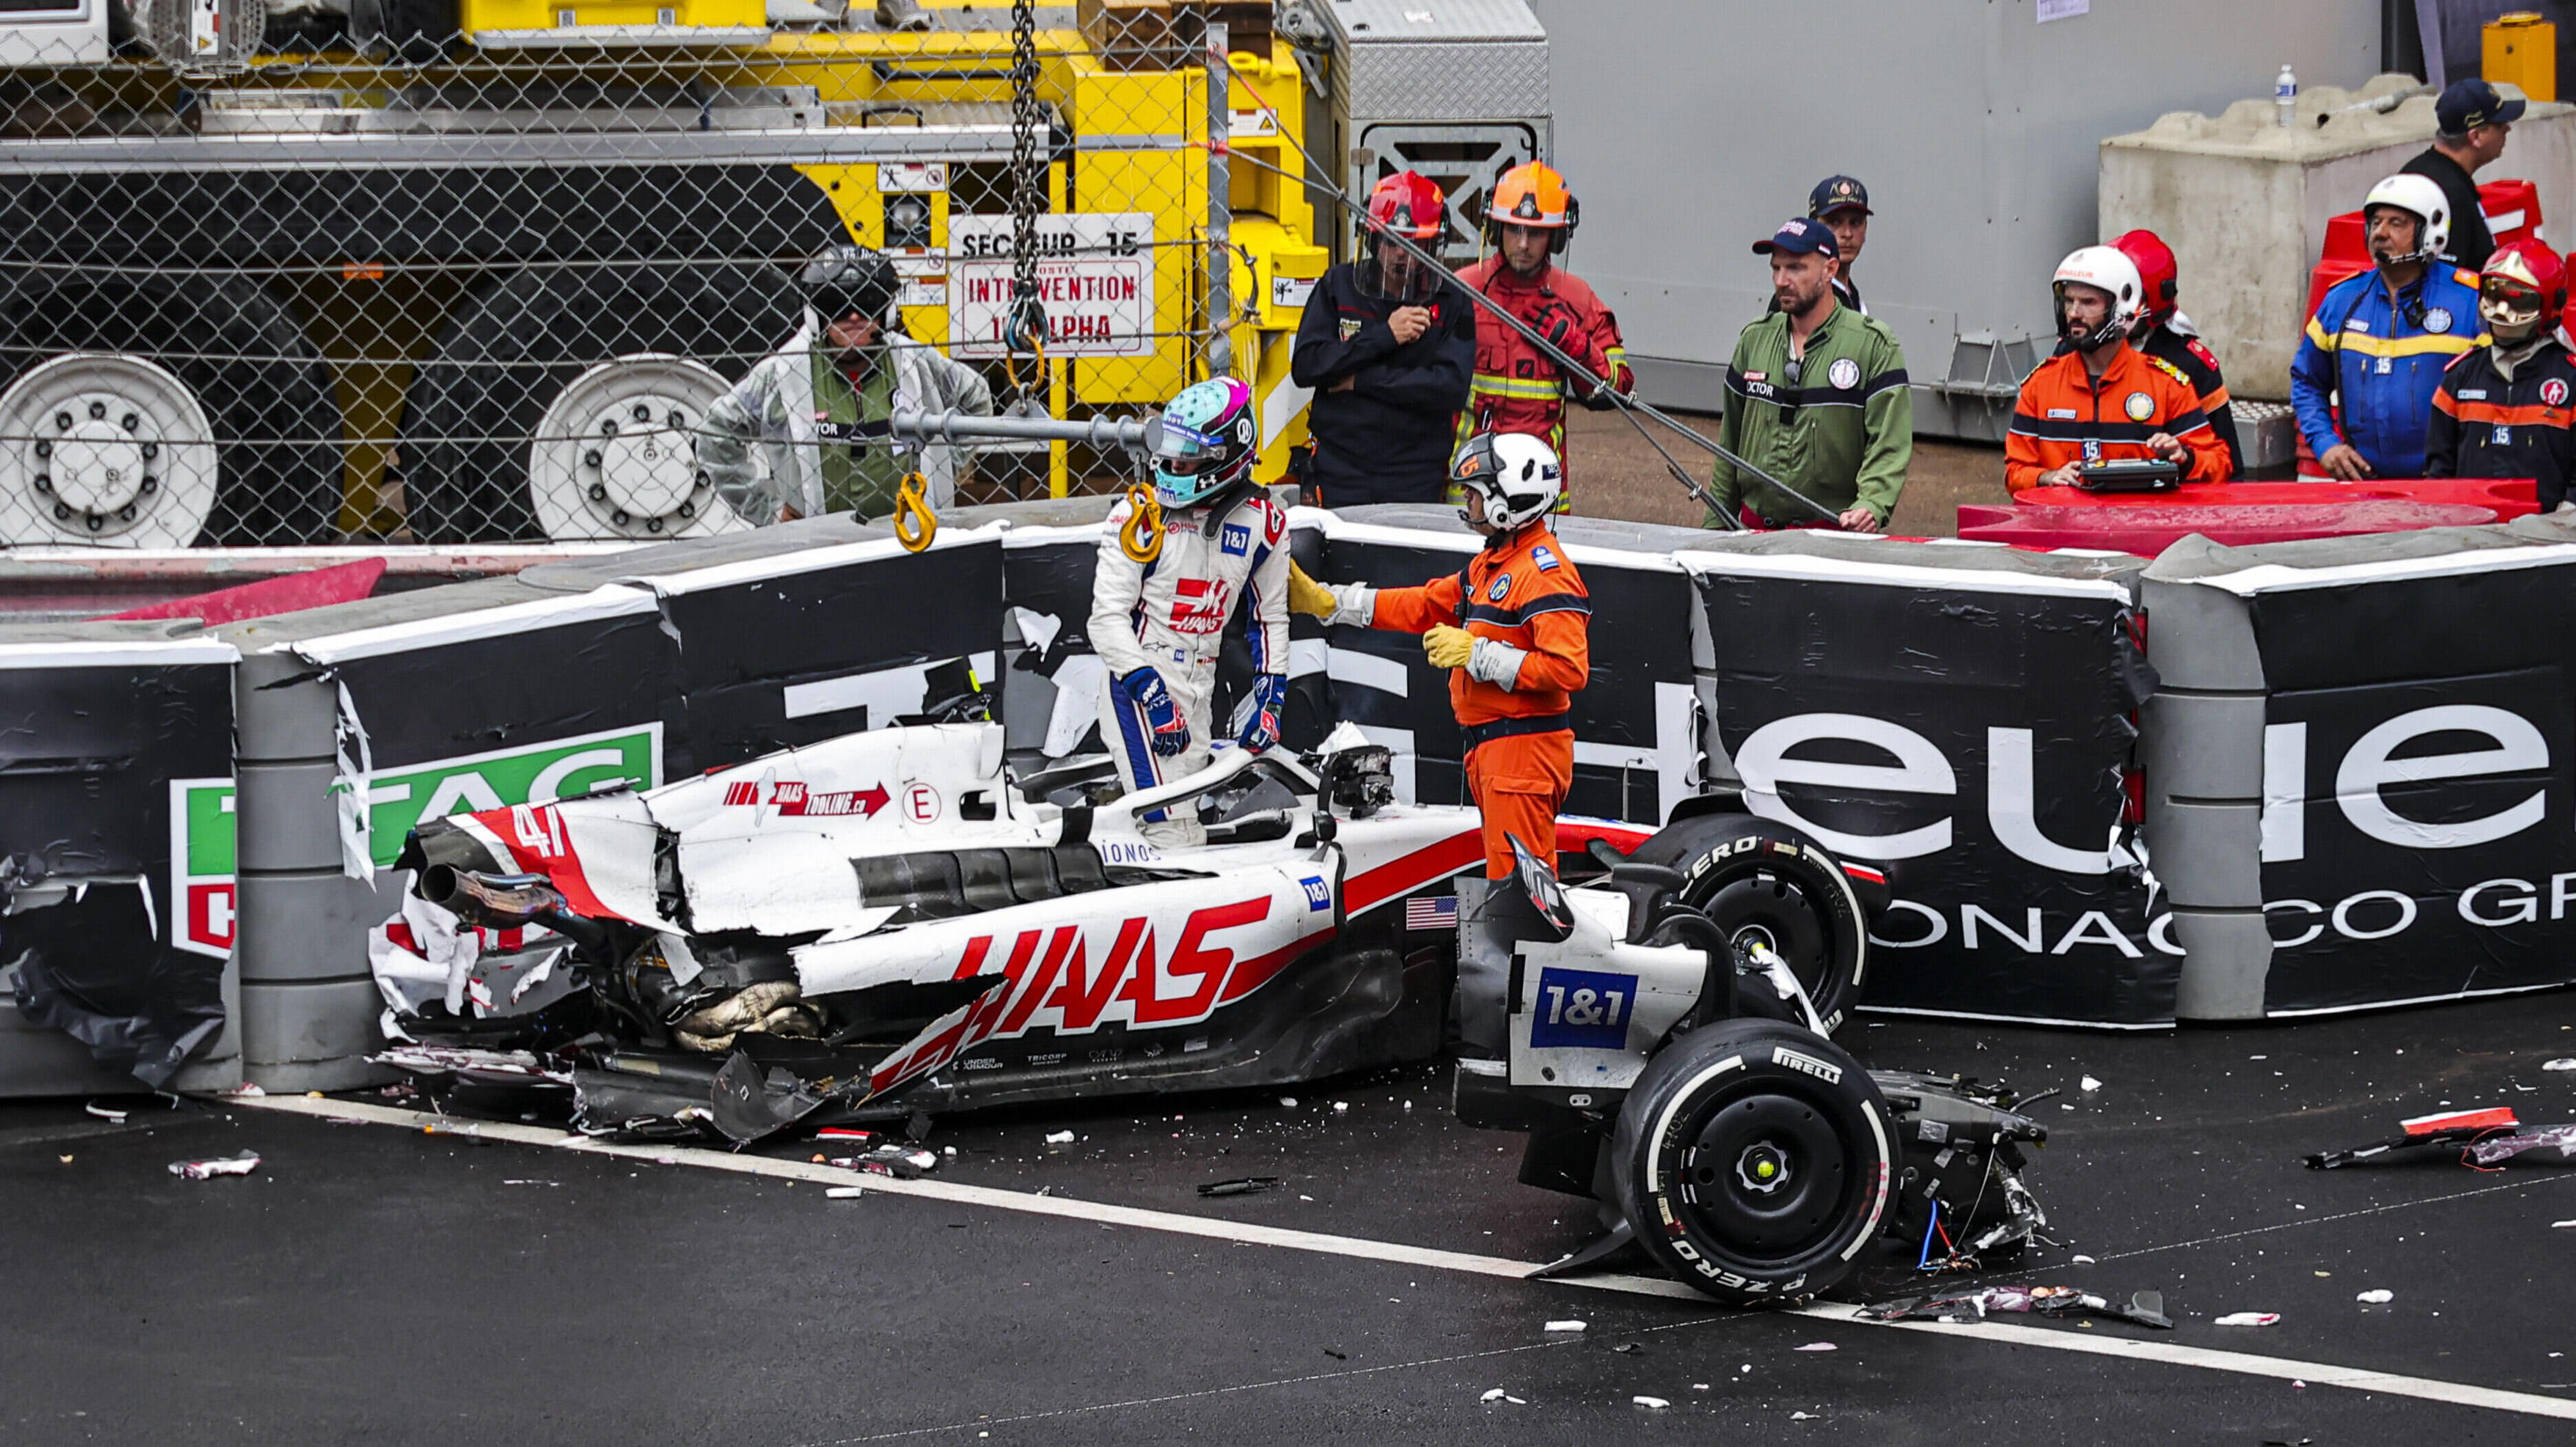 Formel 1 in Monaco Mick Schumacher crasht heftig